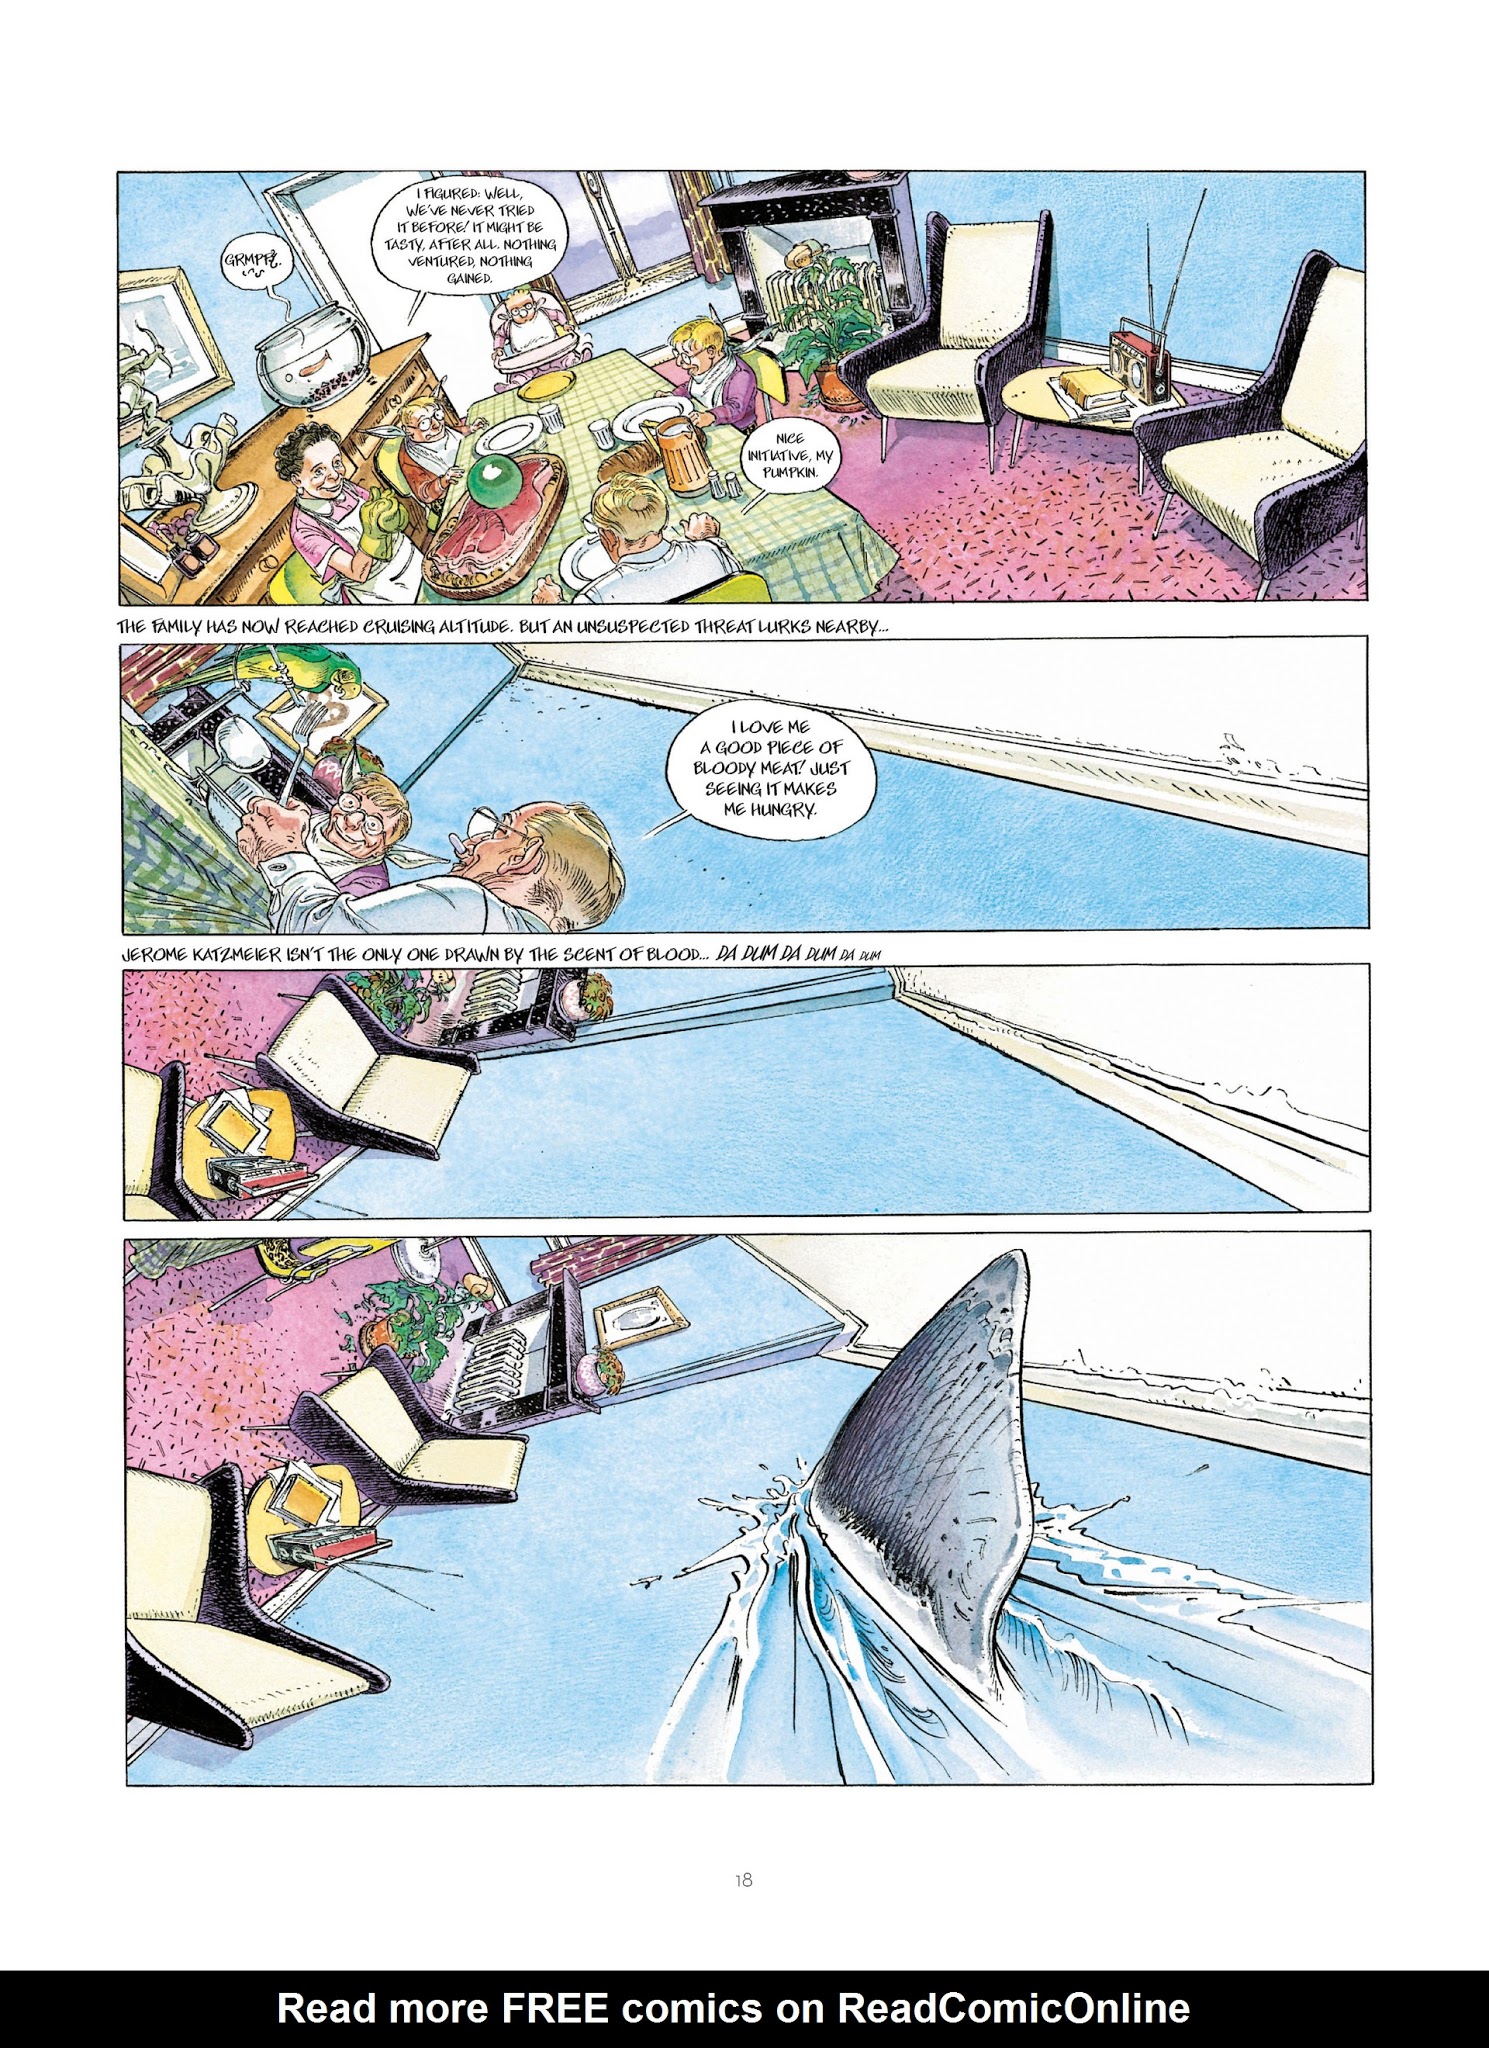 Read online The Adventures of Jerome Katzmeier comic -  Issue # TPB - 18